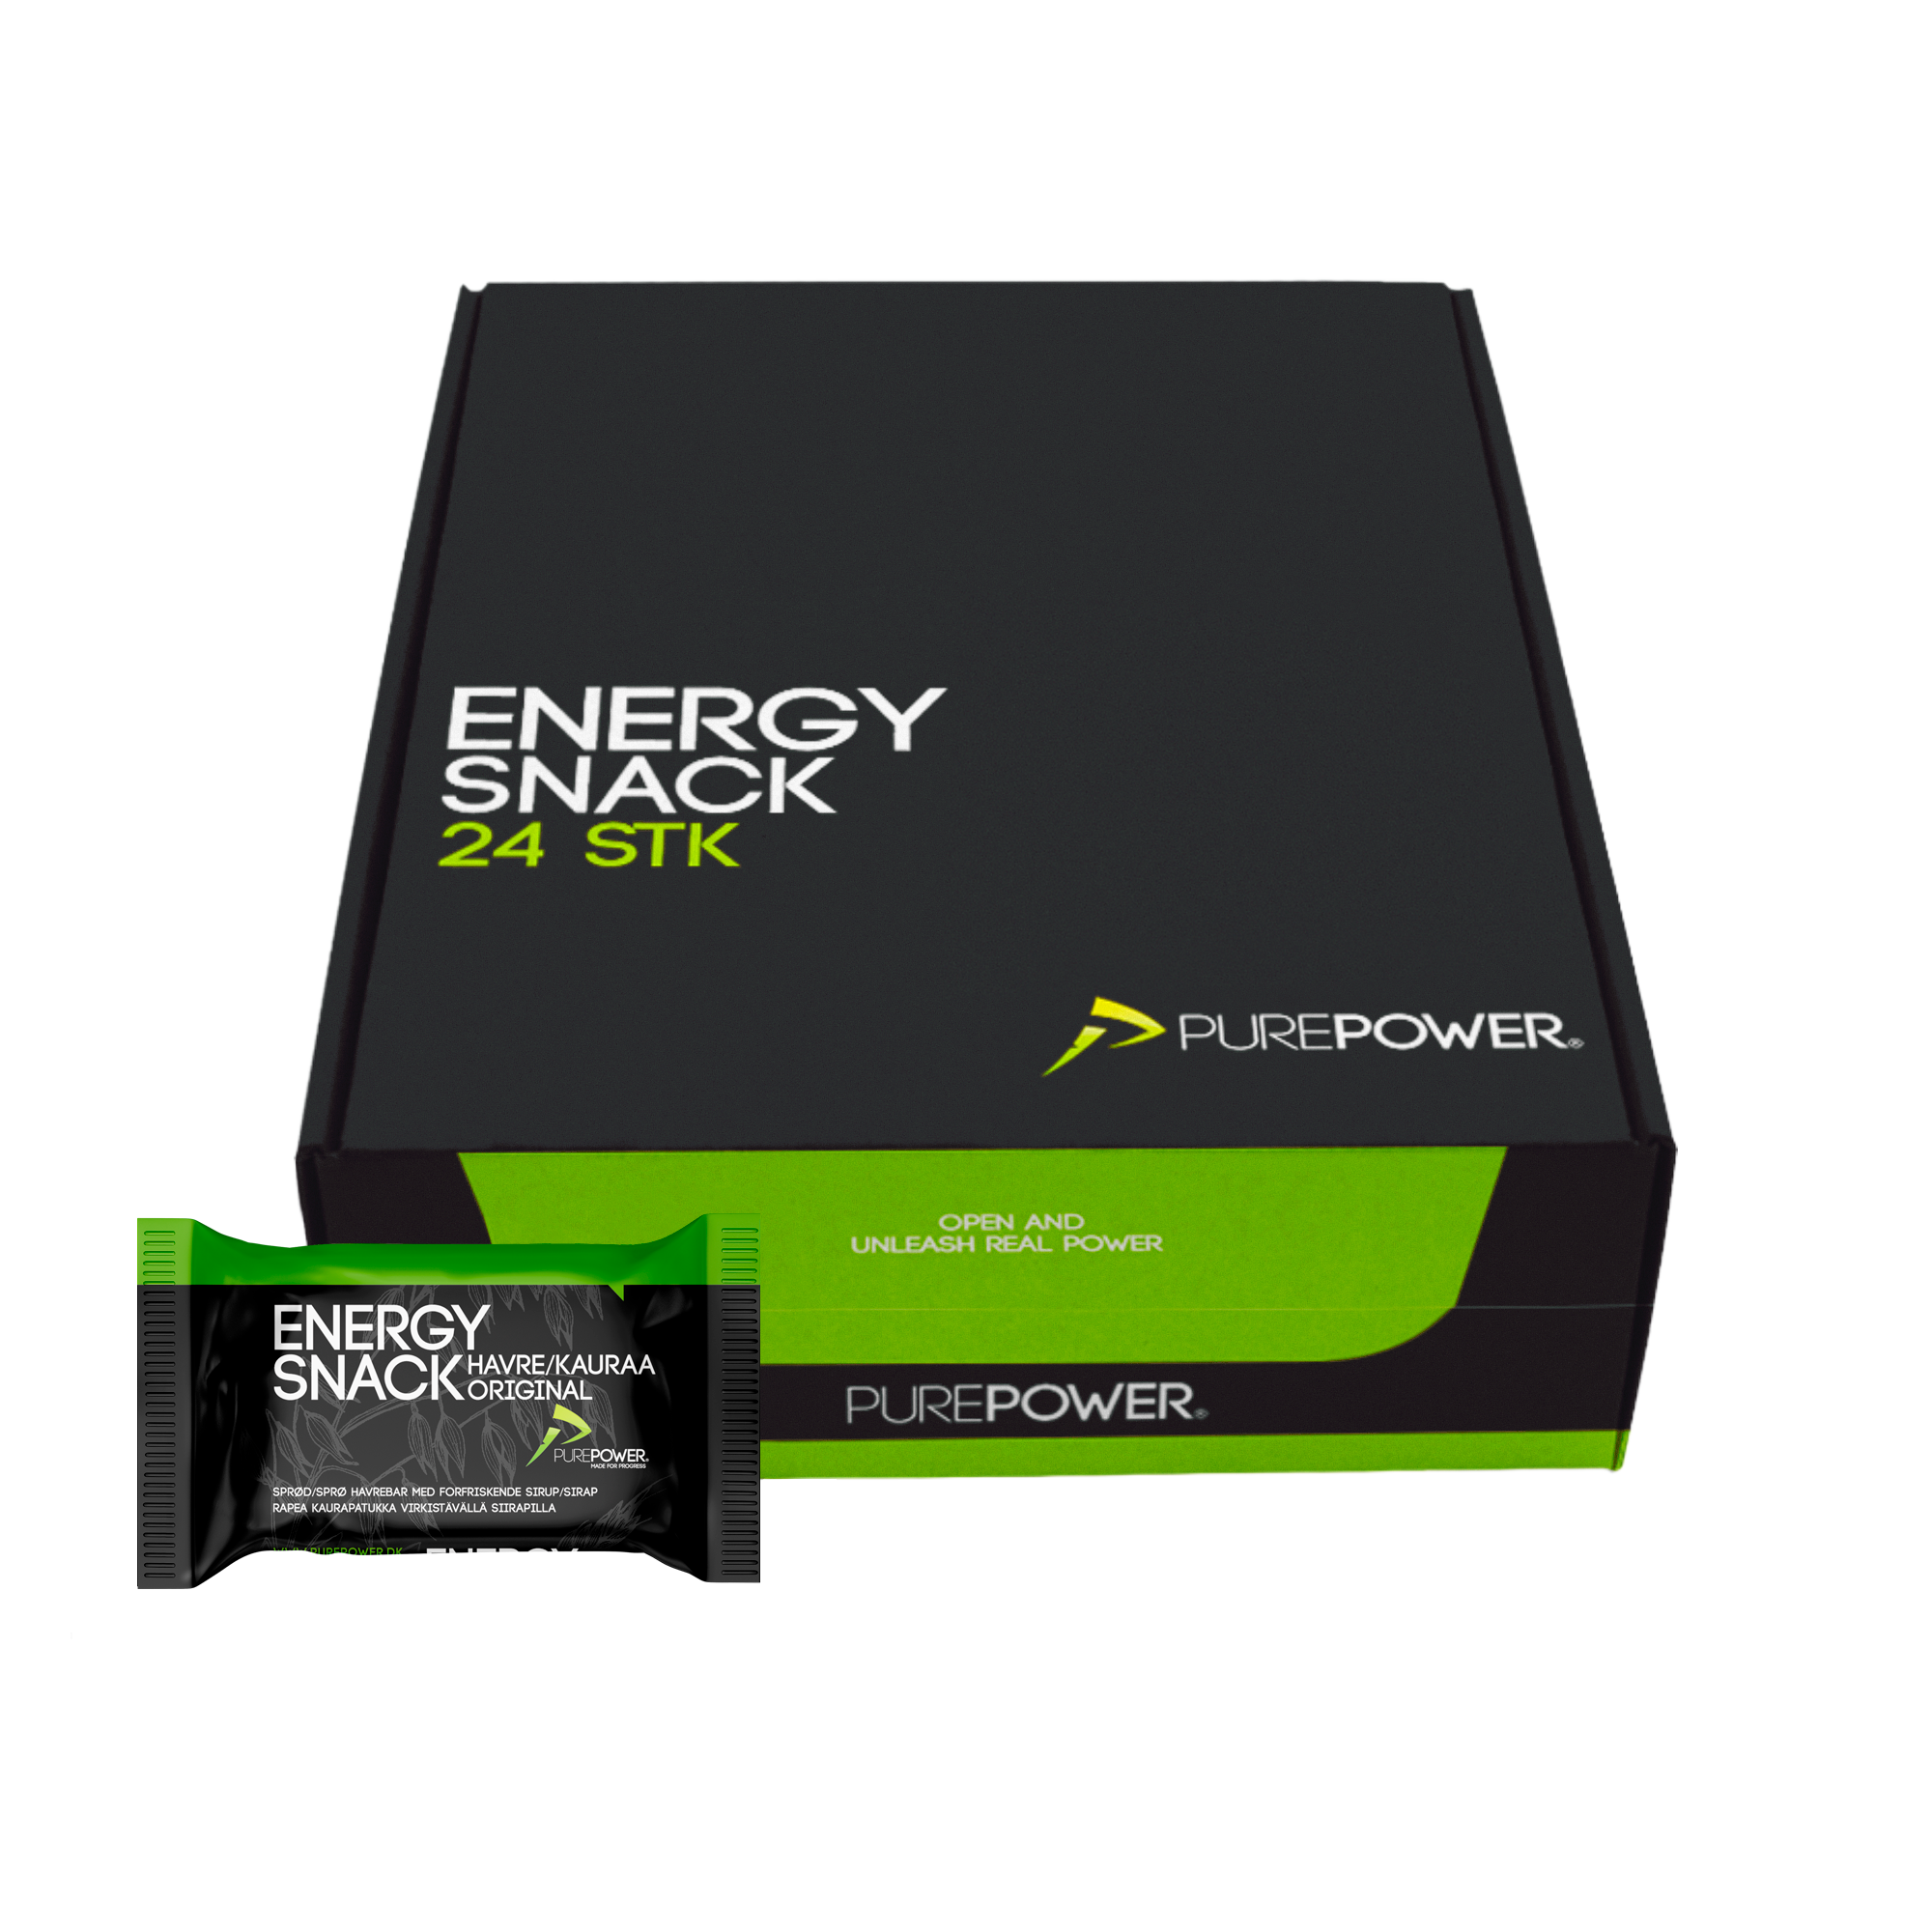 PurePower Energy Snack Original 24 stk